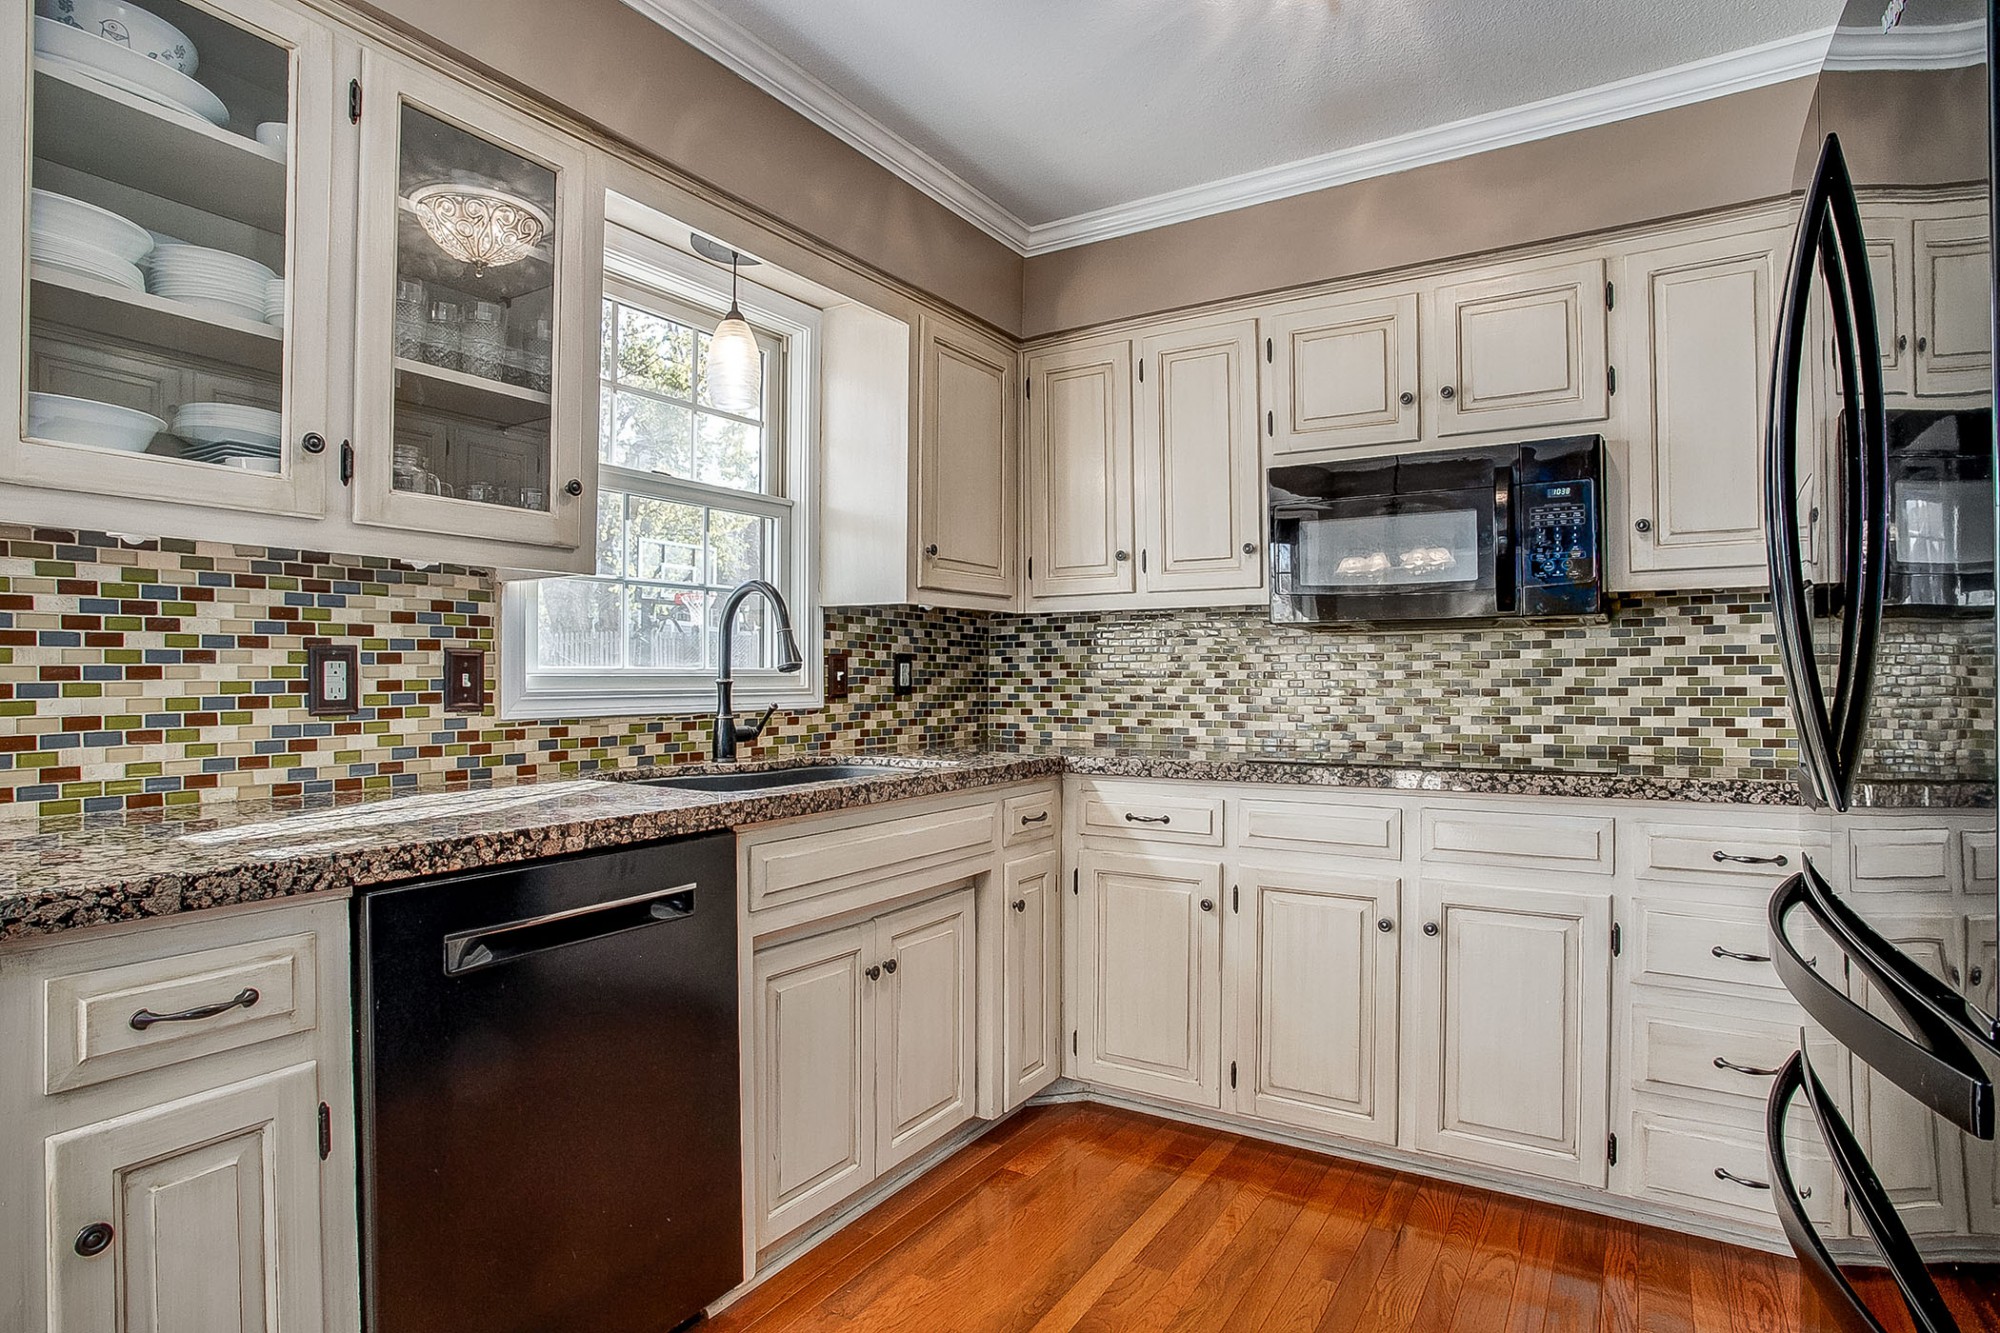 Abundant cottage white cabinetry, gorgeous granite counters, wood floors, and full glass tile mosaic backsplash.